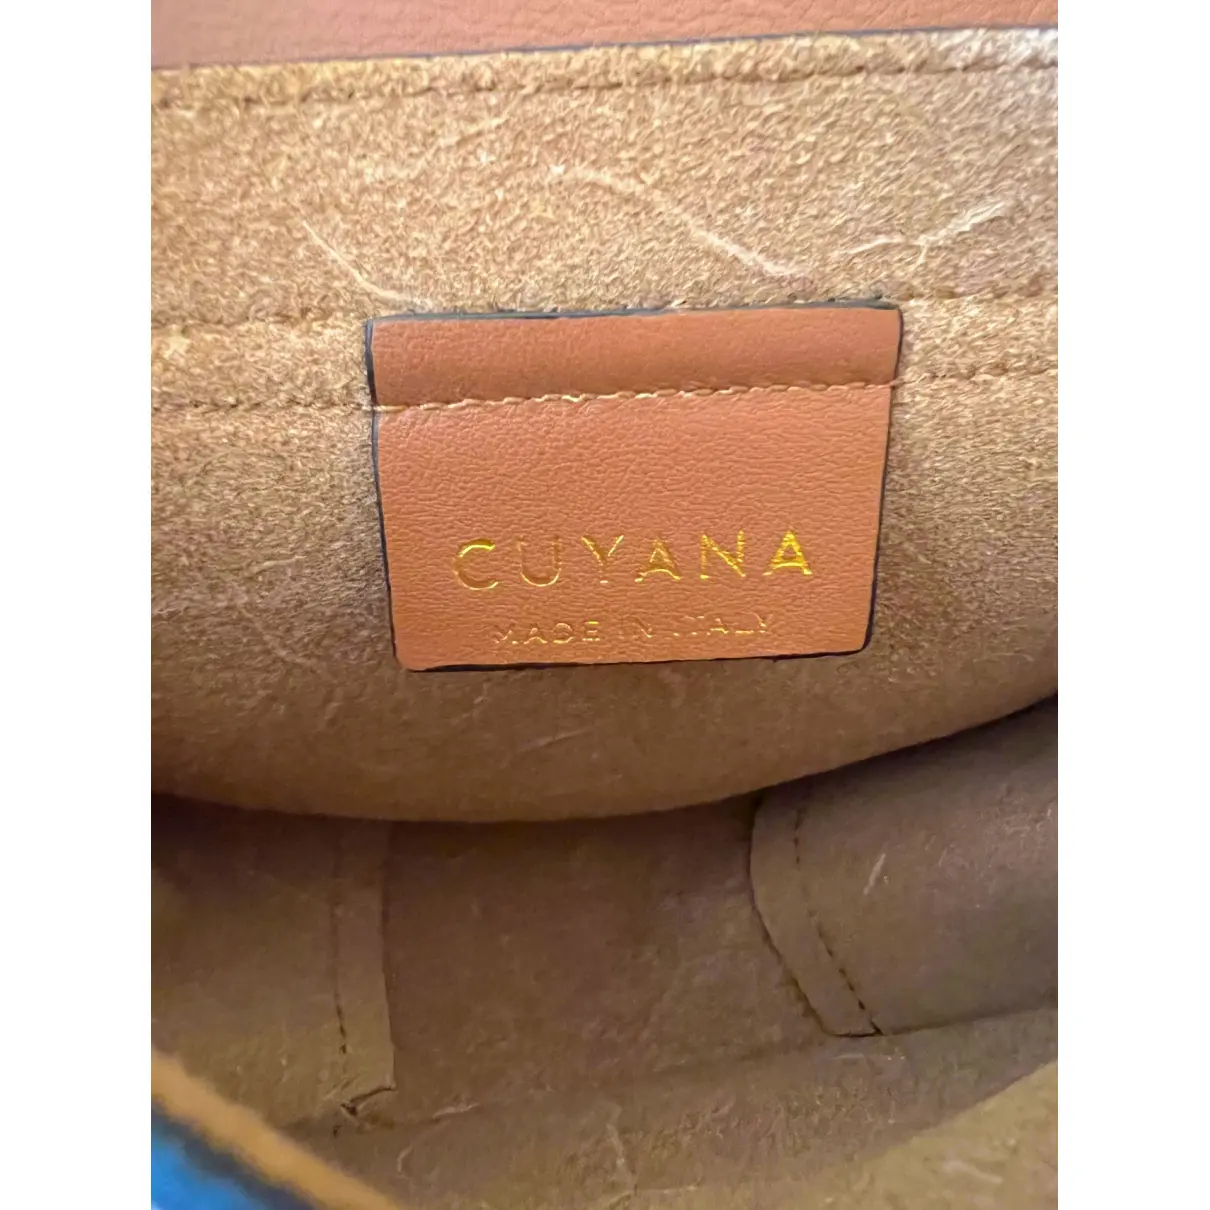 Buy Cuyana Leather crossbody bag online